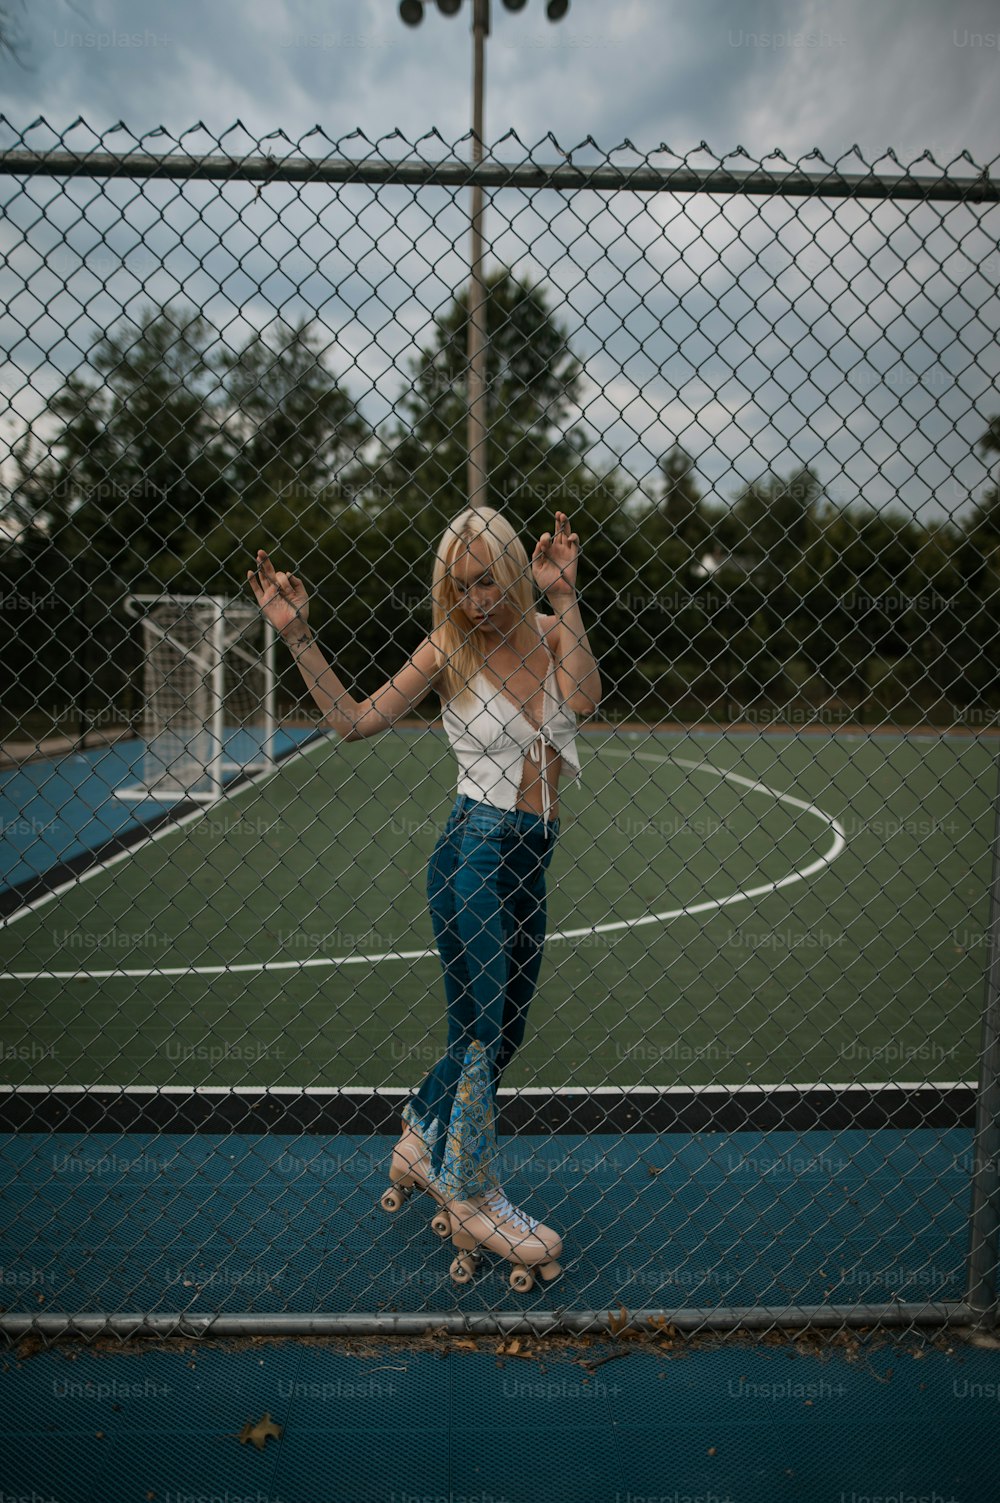 a woman riding a skateboard through a chain link fence